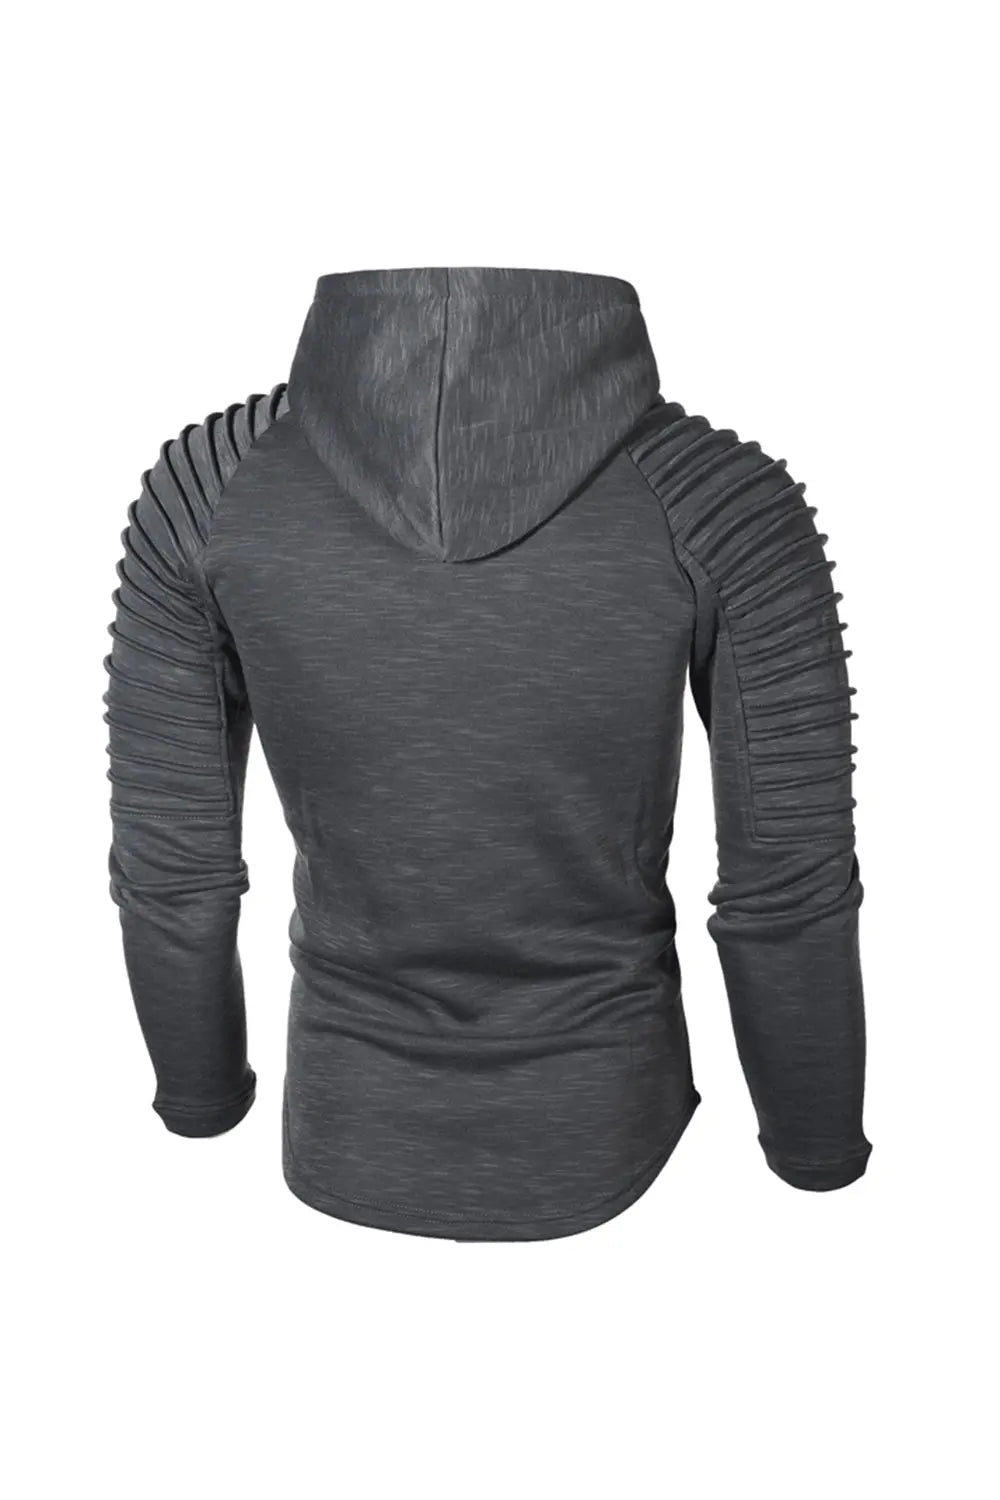 Striped Sweatshirt - Gray - Strange Clothes